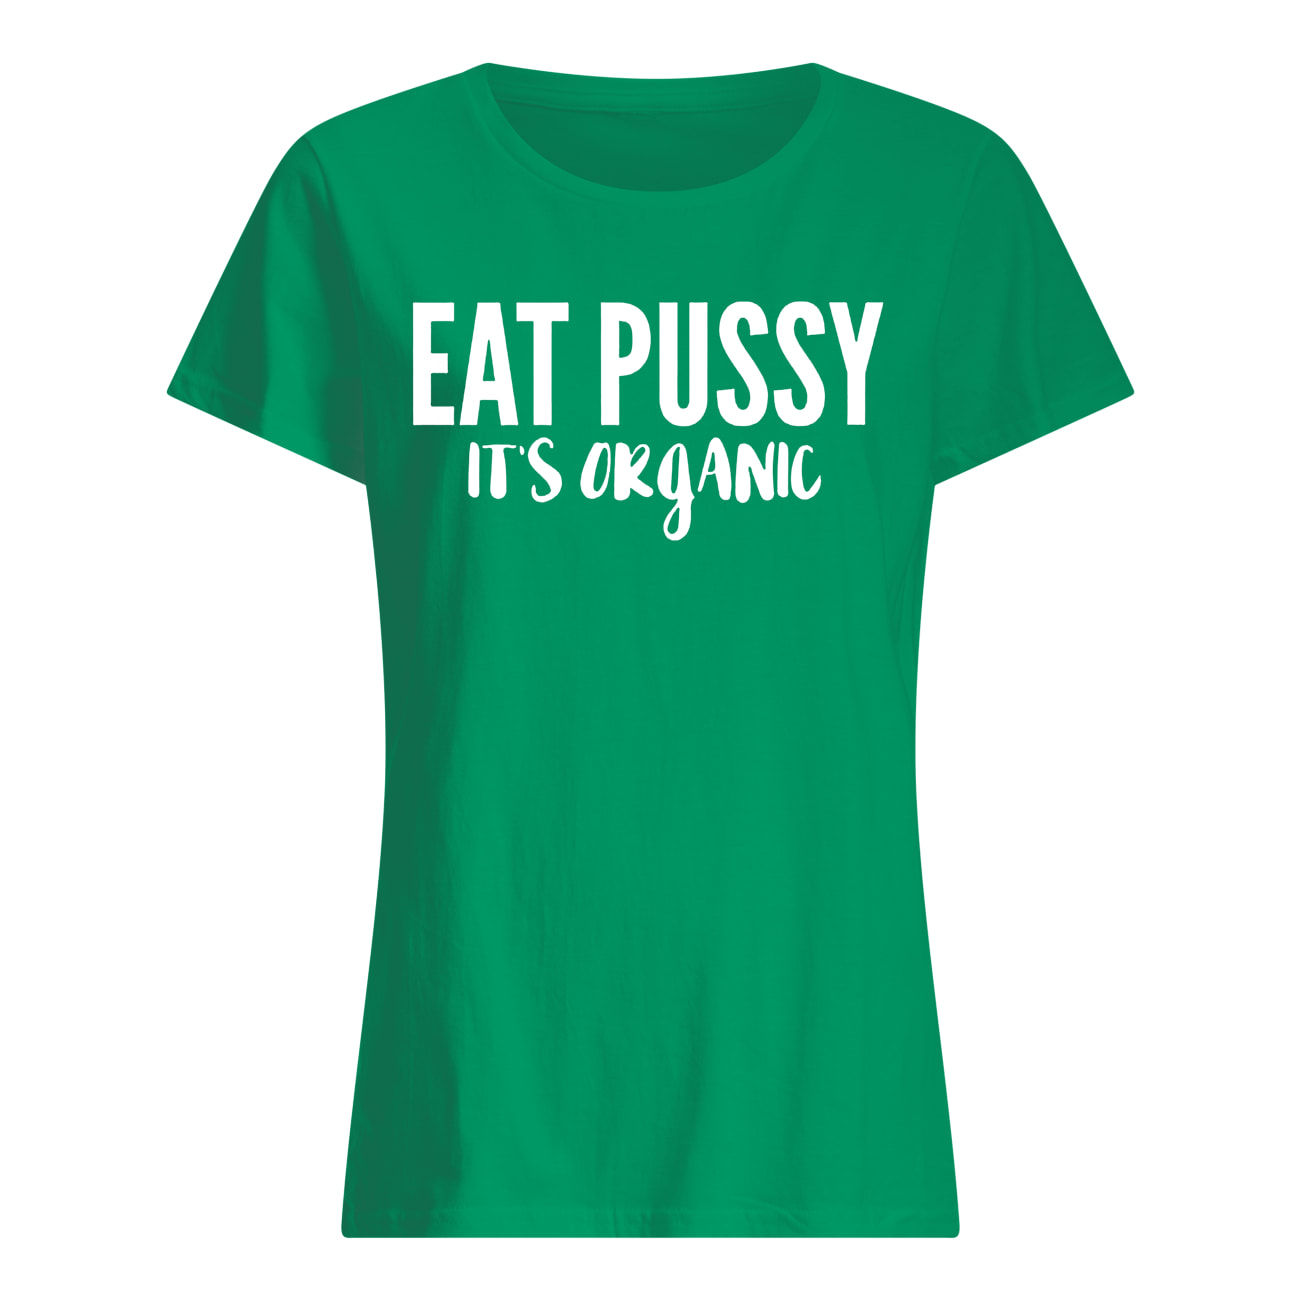 Eat pussy it's organic womens shirt